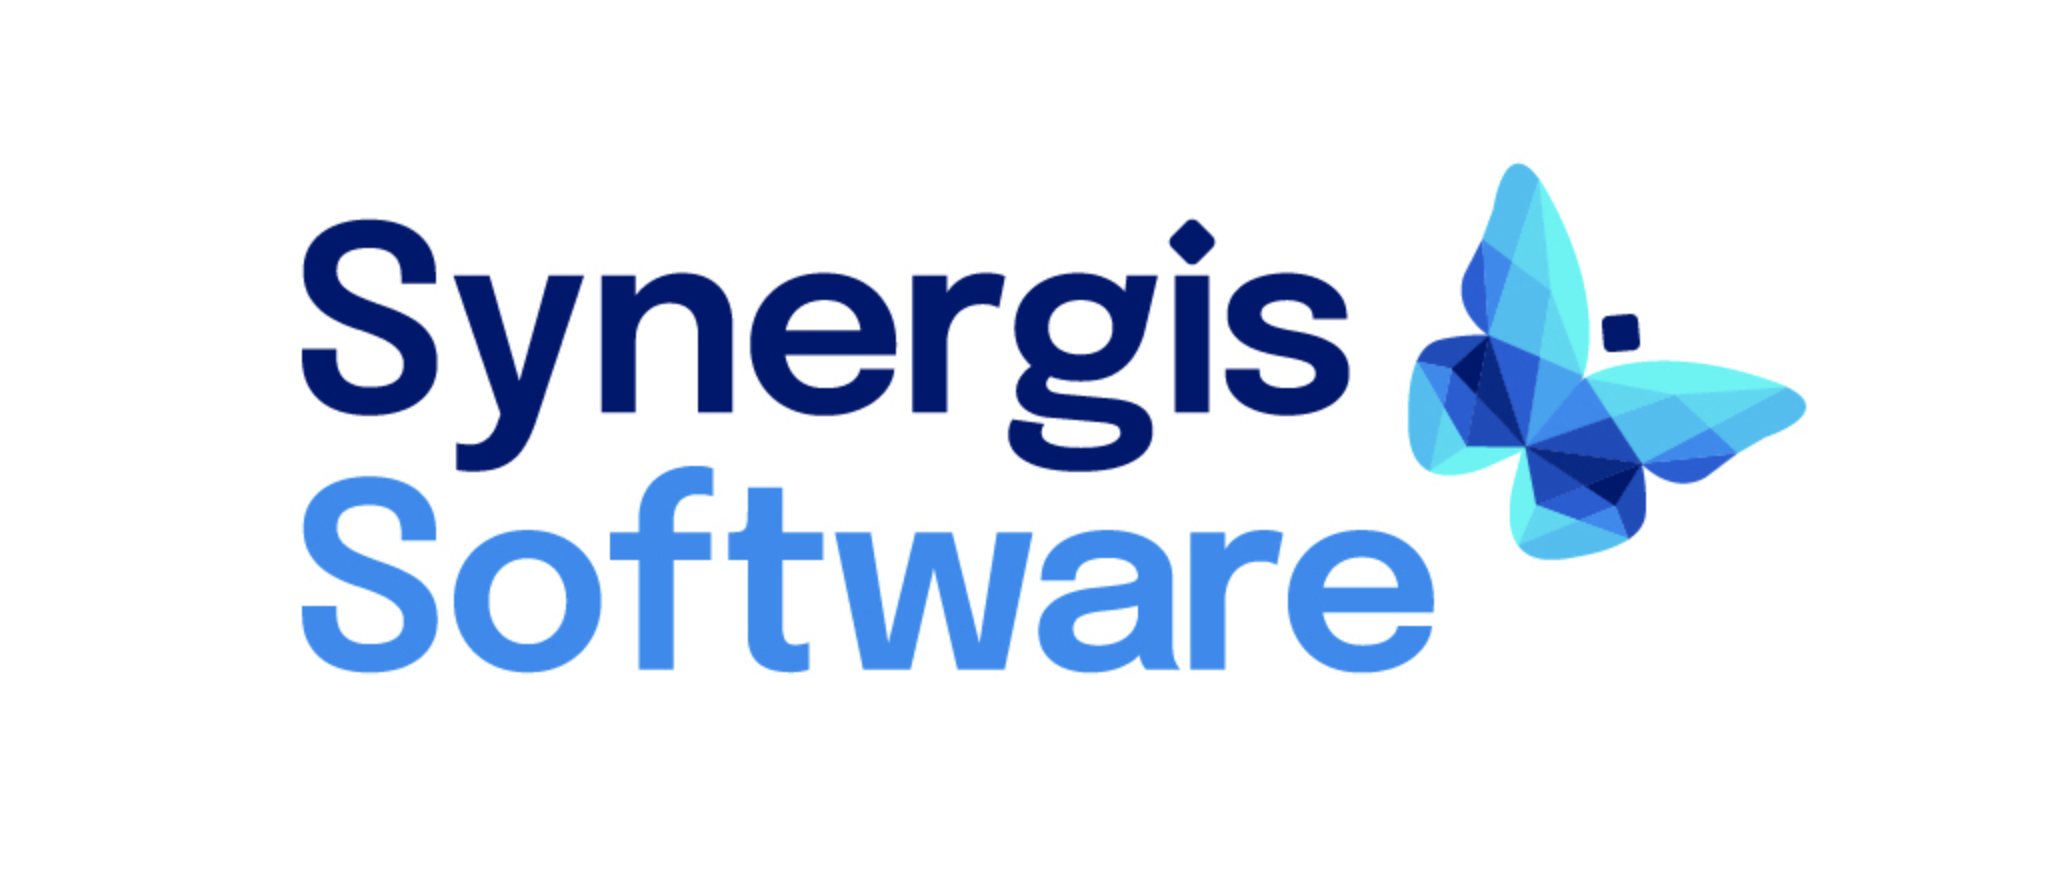 Synergis Software宣布了品牌形象重塑和新网站设计